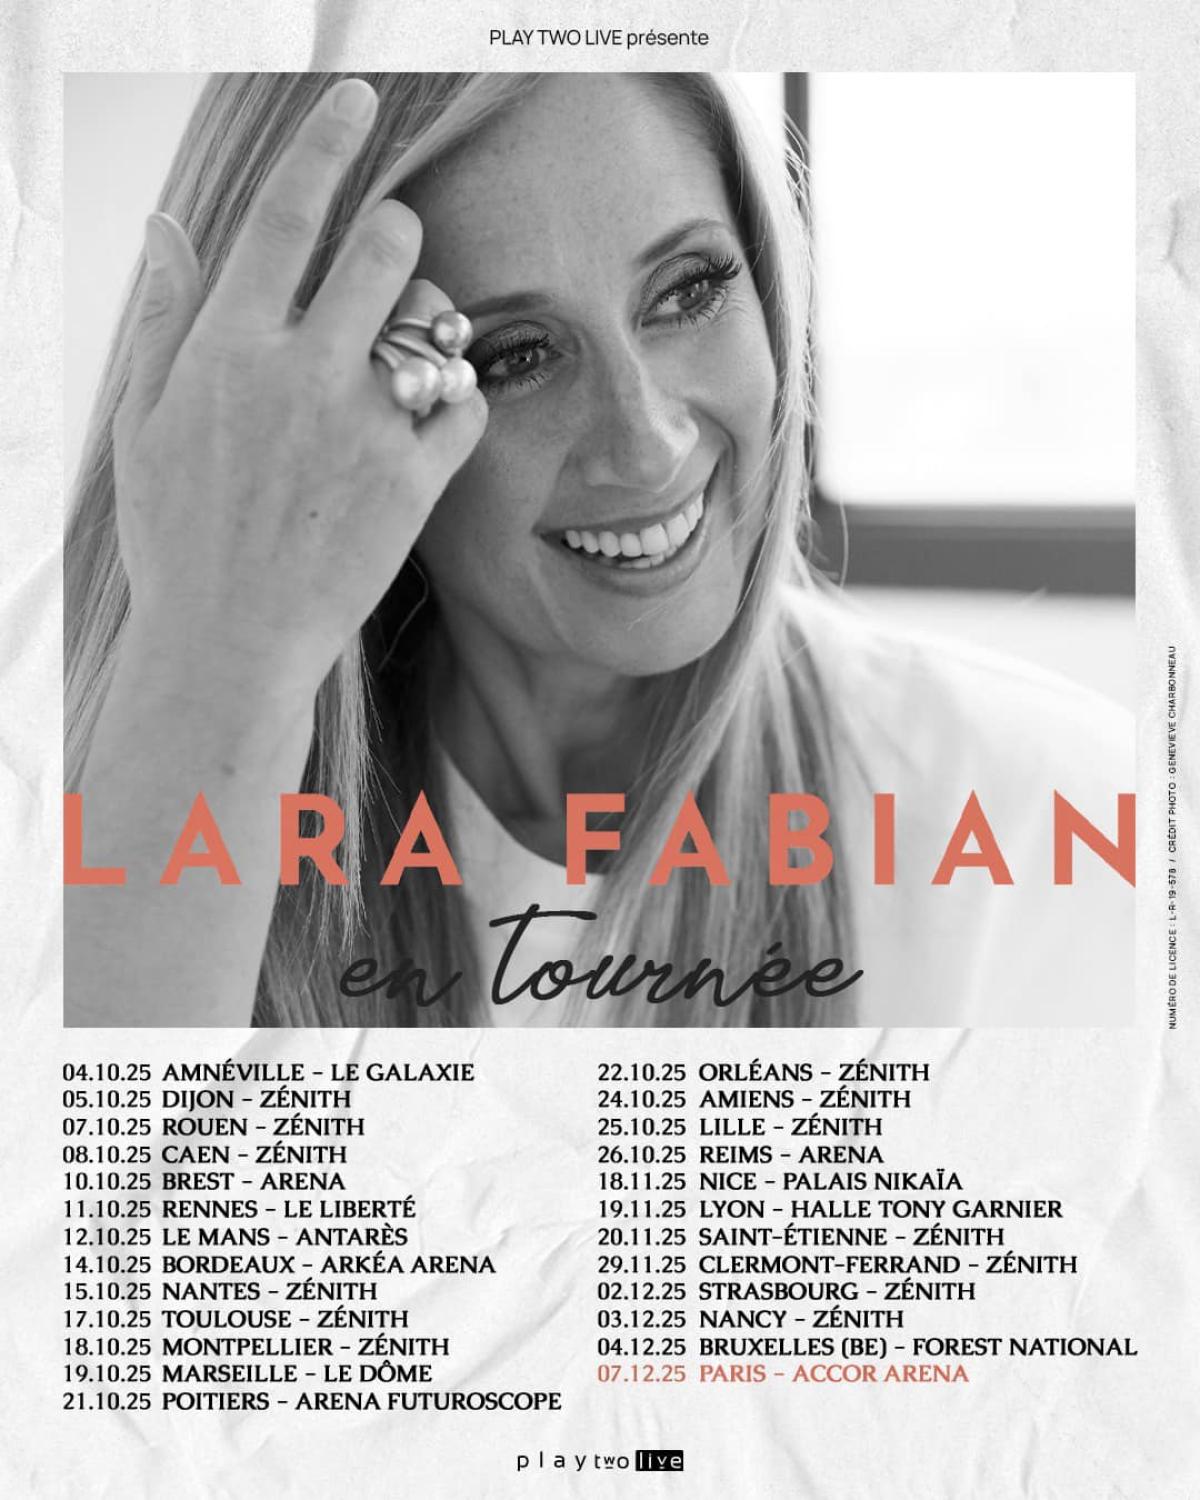 Lara Fabian at Zenith Toulouse Tickets